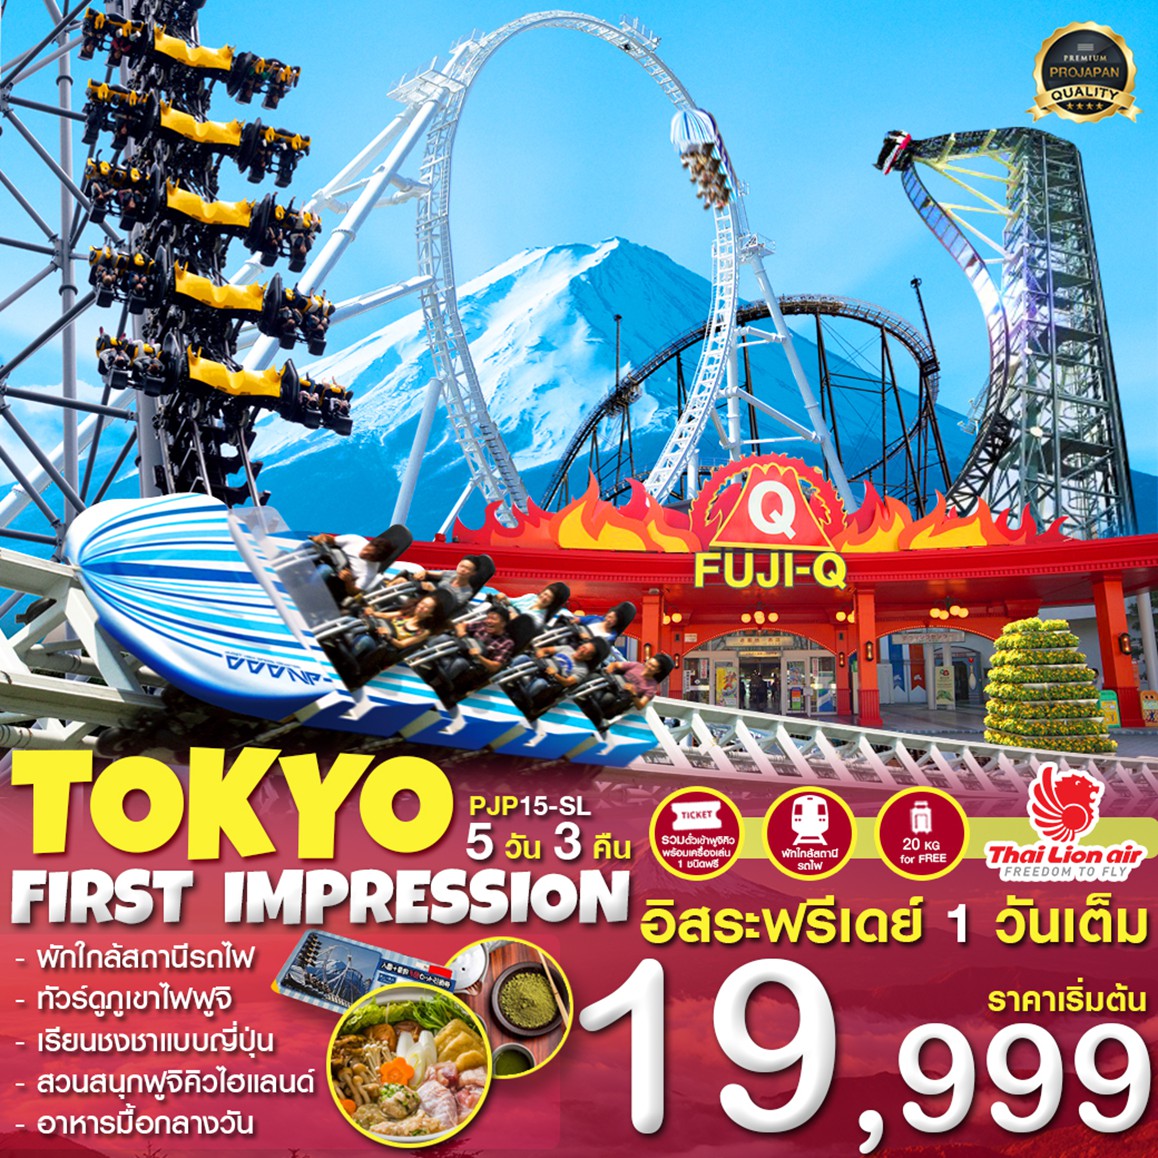 PJP15-SL PRO TOKYO FIRST IMPRESSION เดินทางพีเรียต พ.ย.-ธ.ค. 62 ราคาเริ่มต้น 19999 บาท